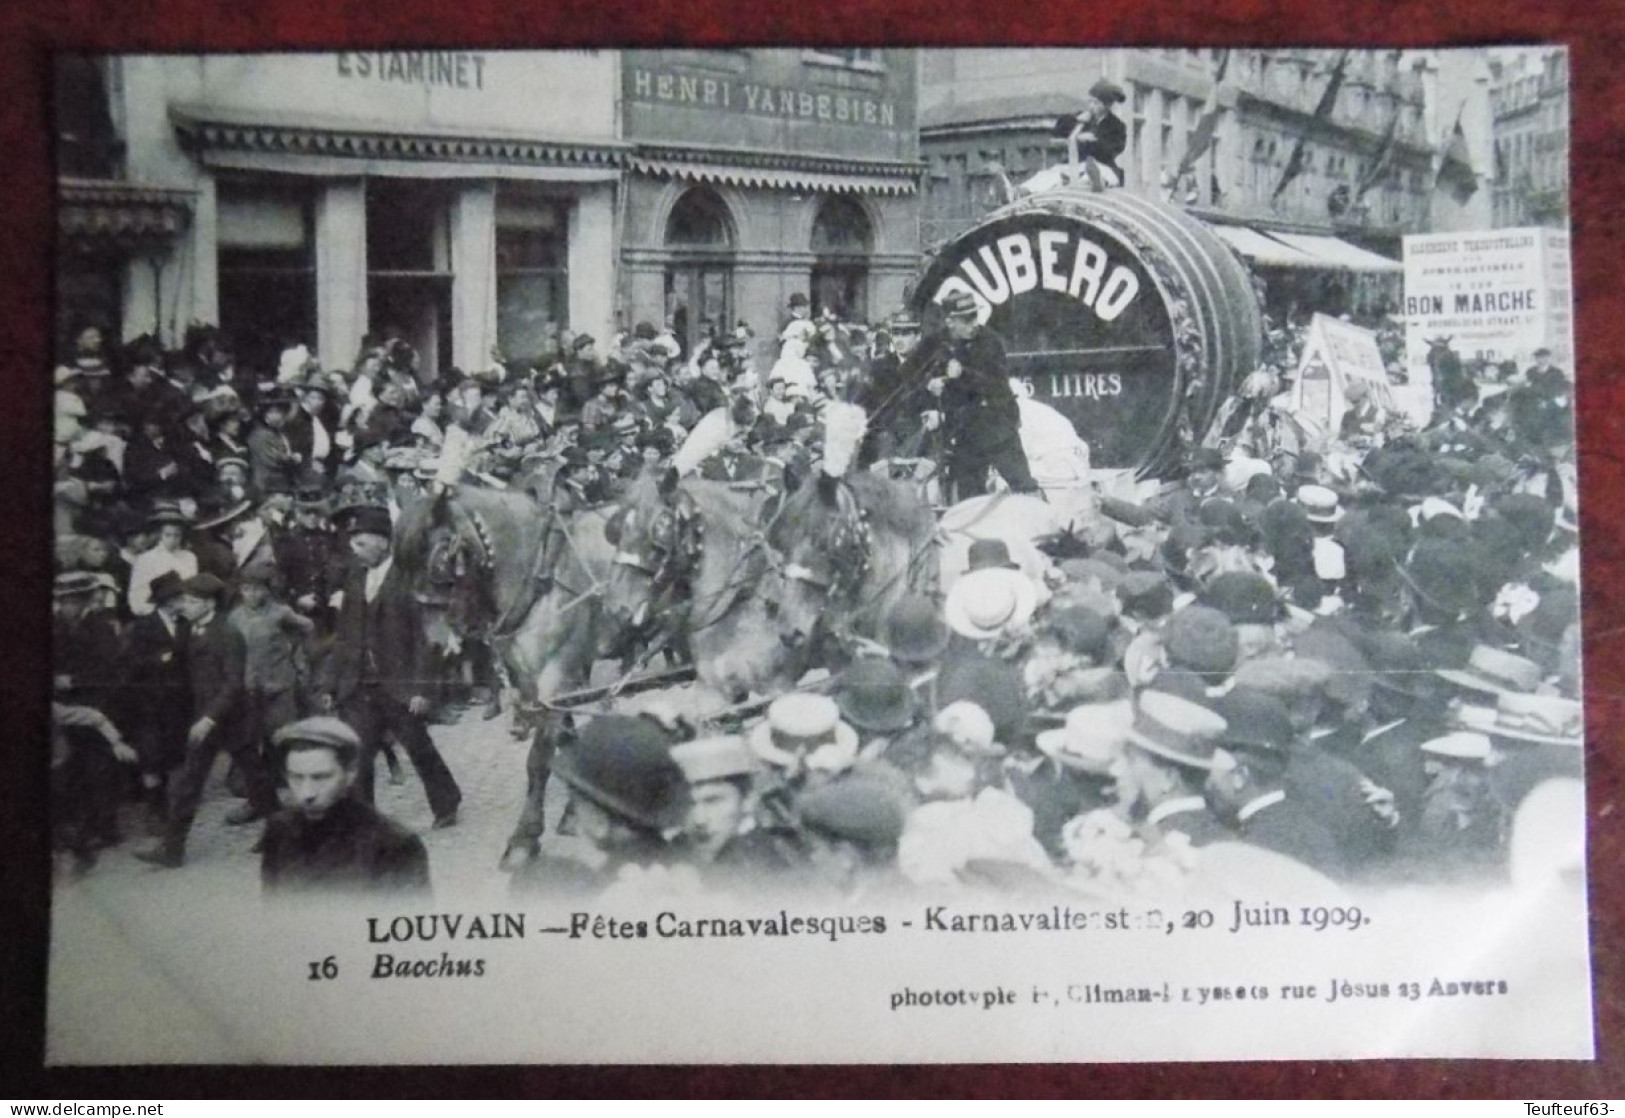 Cpa Louvain ; Fêtes Carnavalesques - Karnavalfeesten 20.06.1909 - Bacchus - Leuven